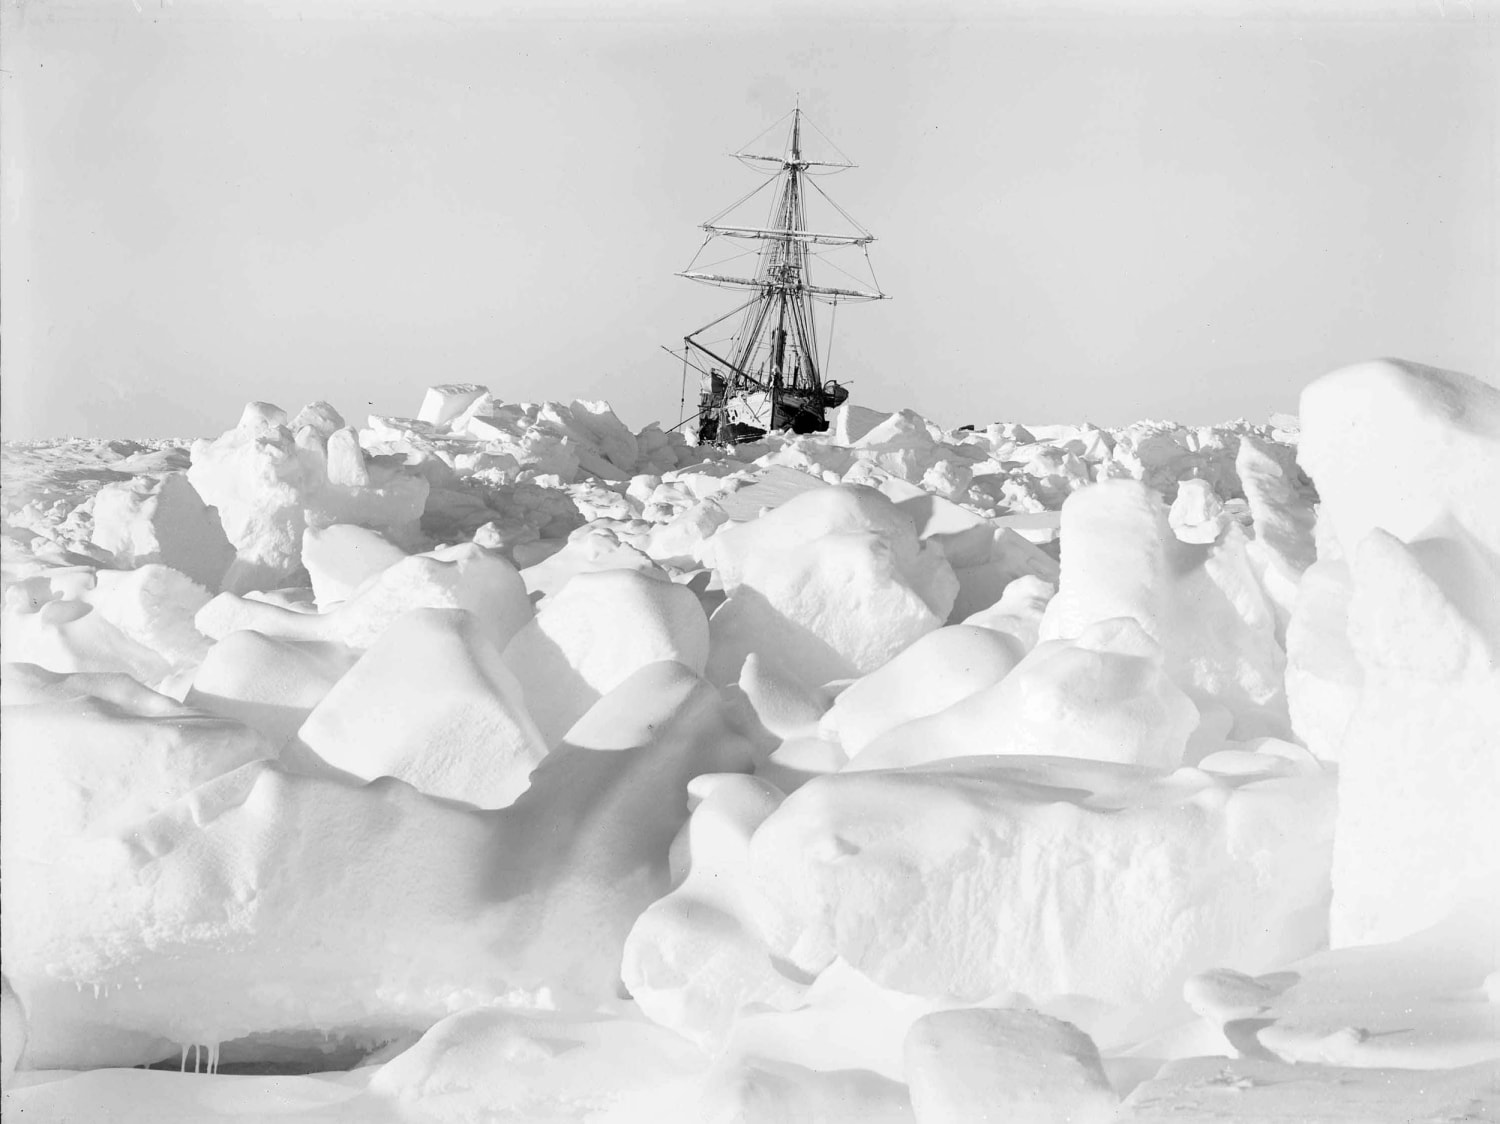 Nord Traktat Byttehandel Shackleton's lost ship 'Endurance' to be target of new expedition